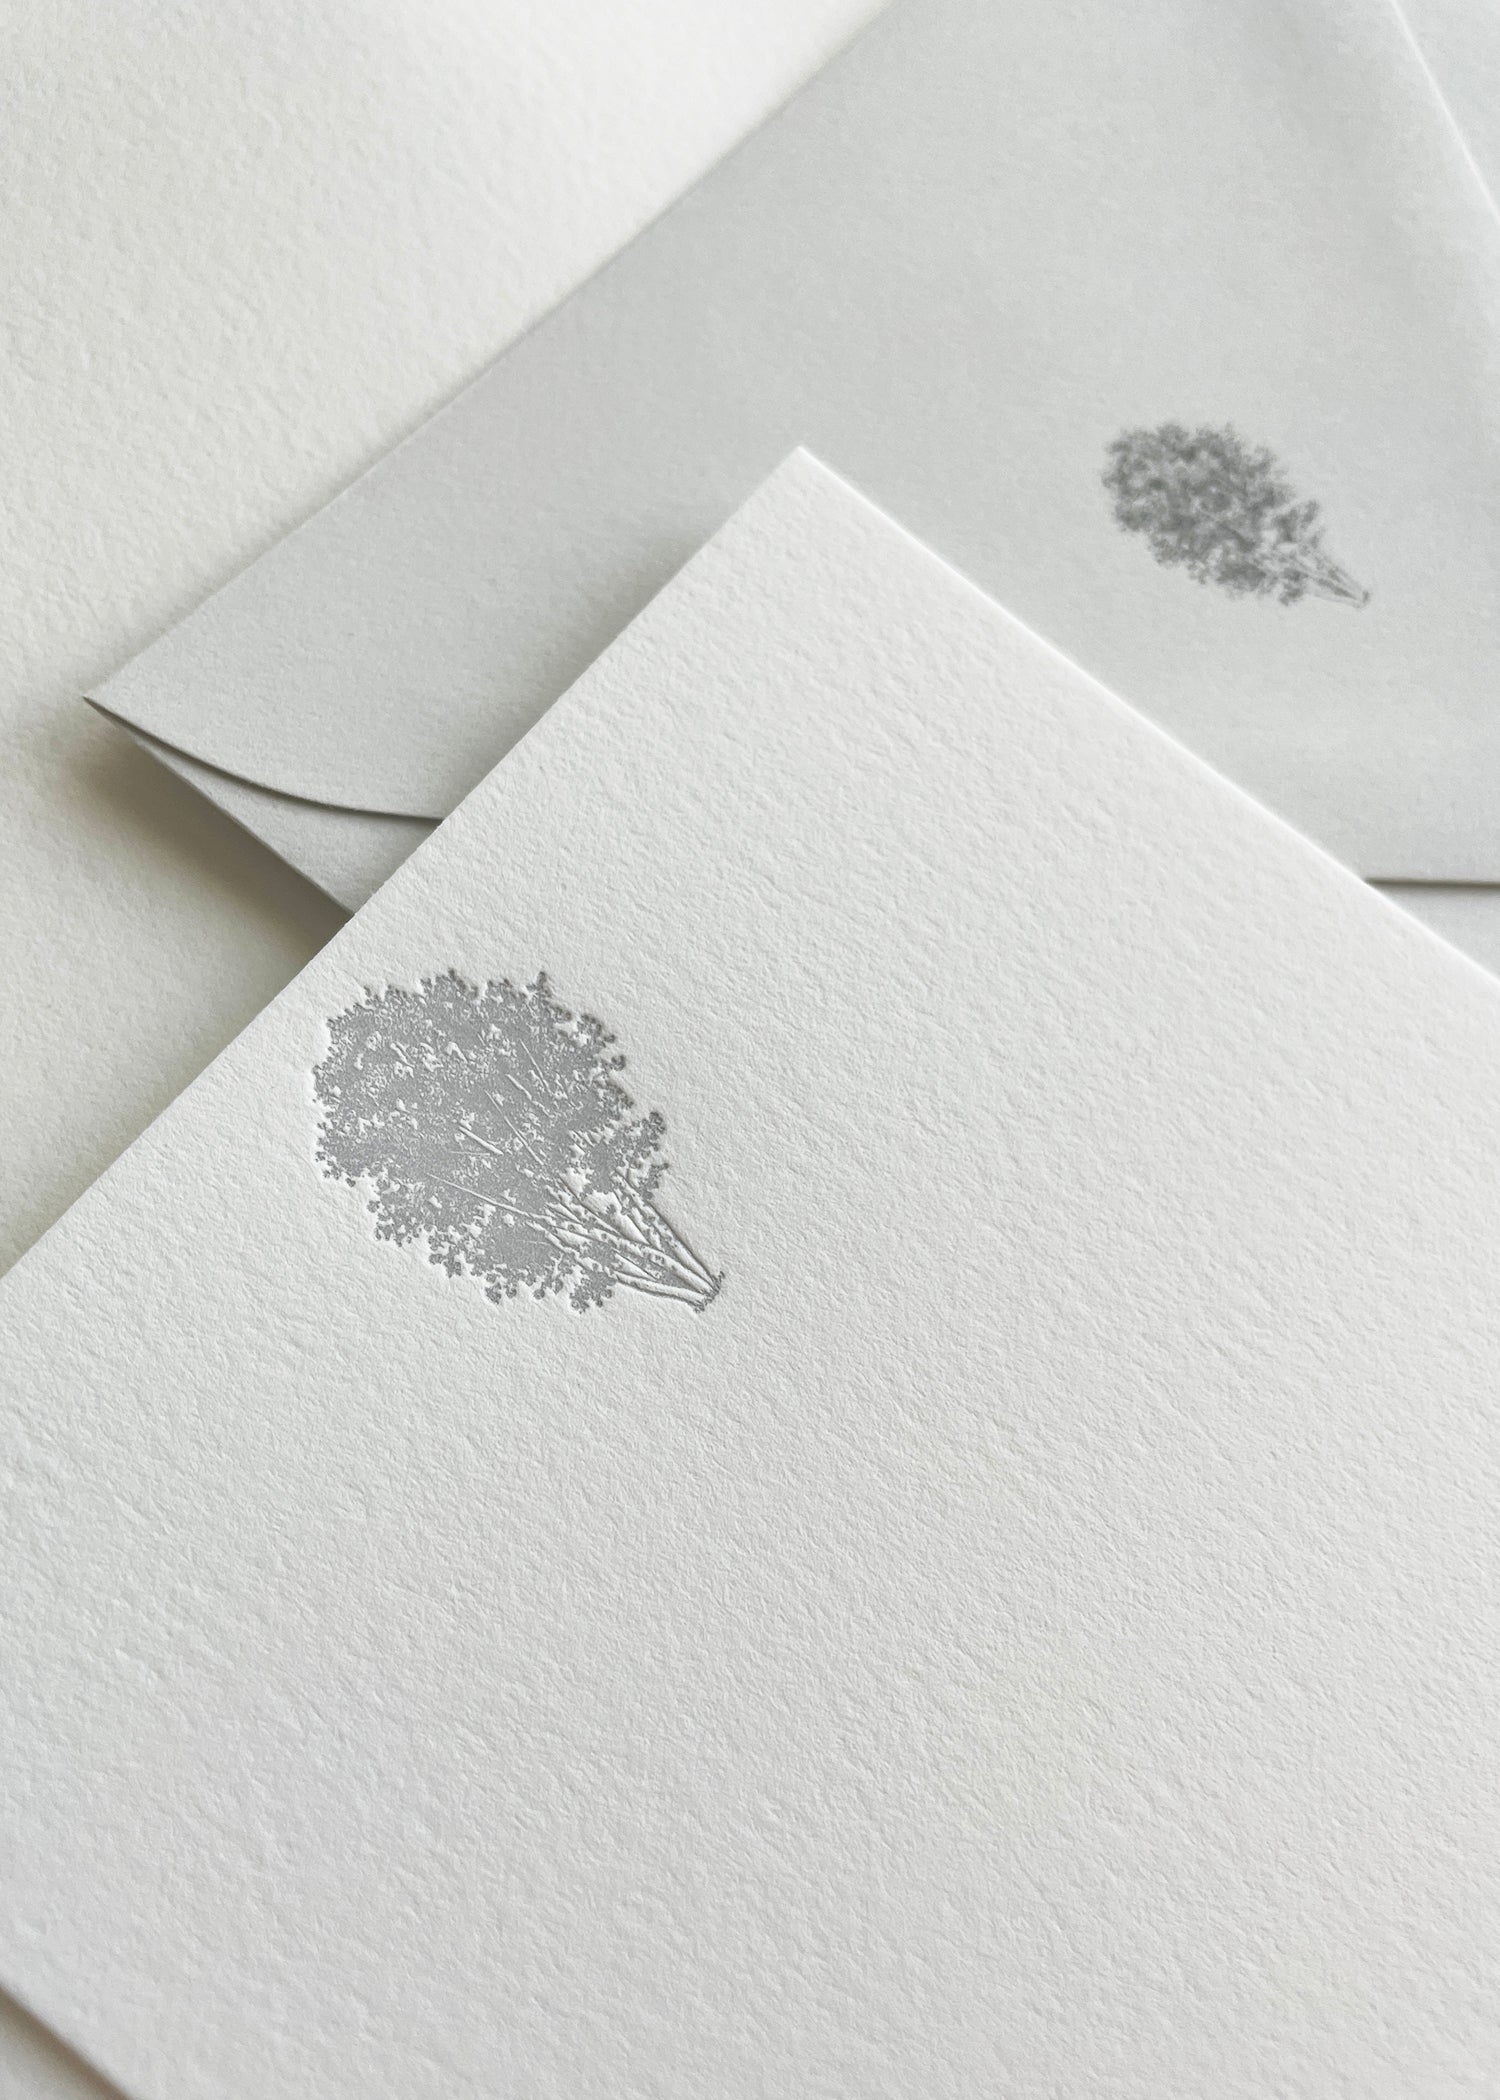 Letterpress flat note card with a grey birch tree by Rust Belt Love